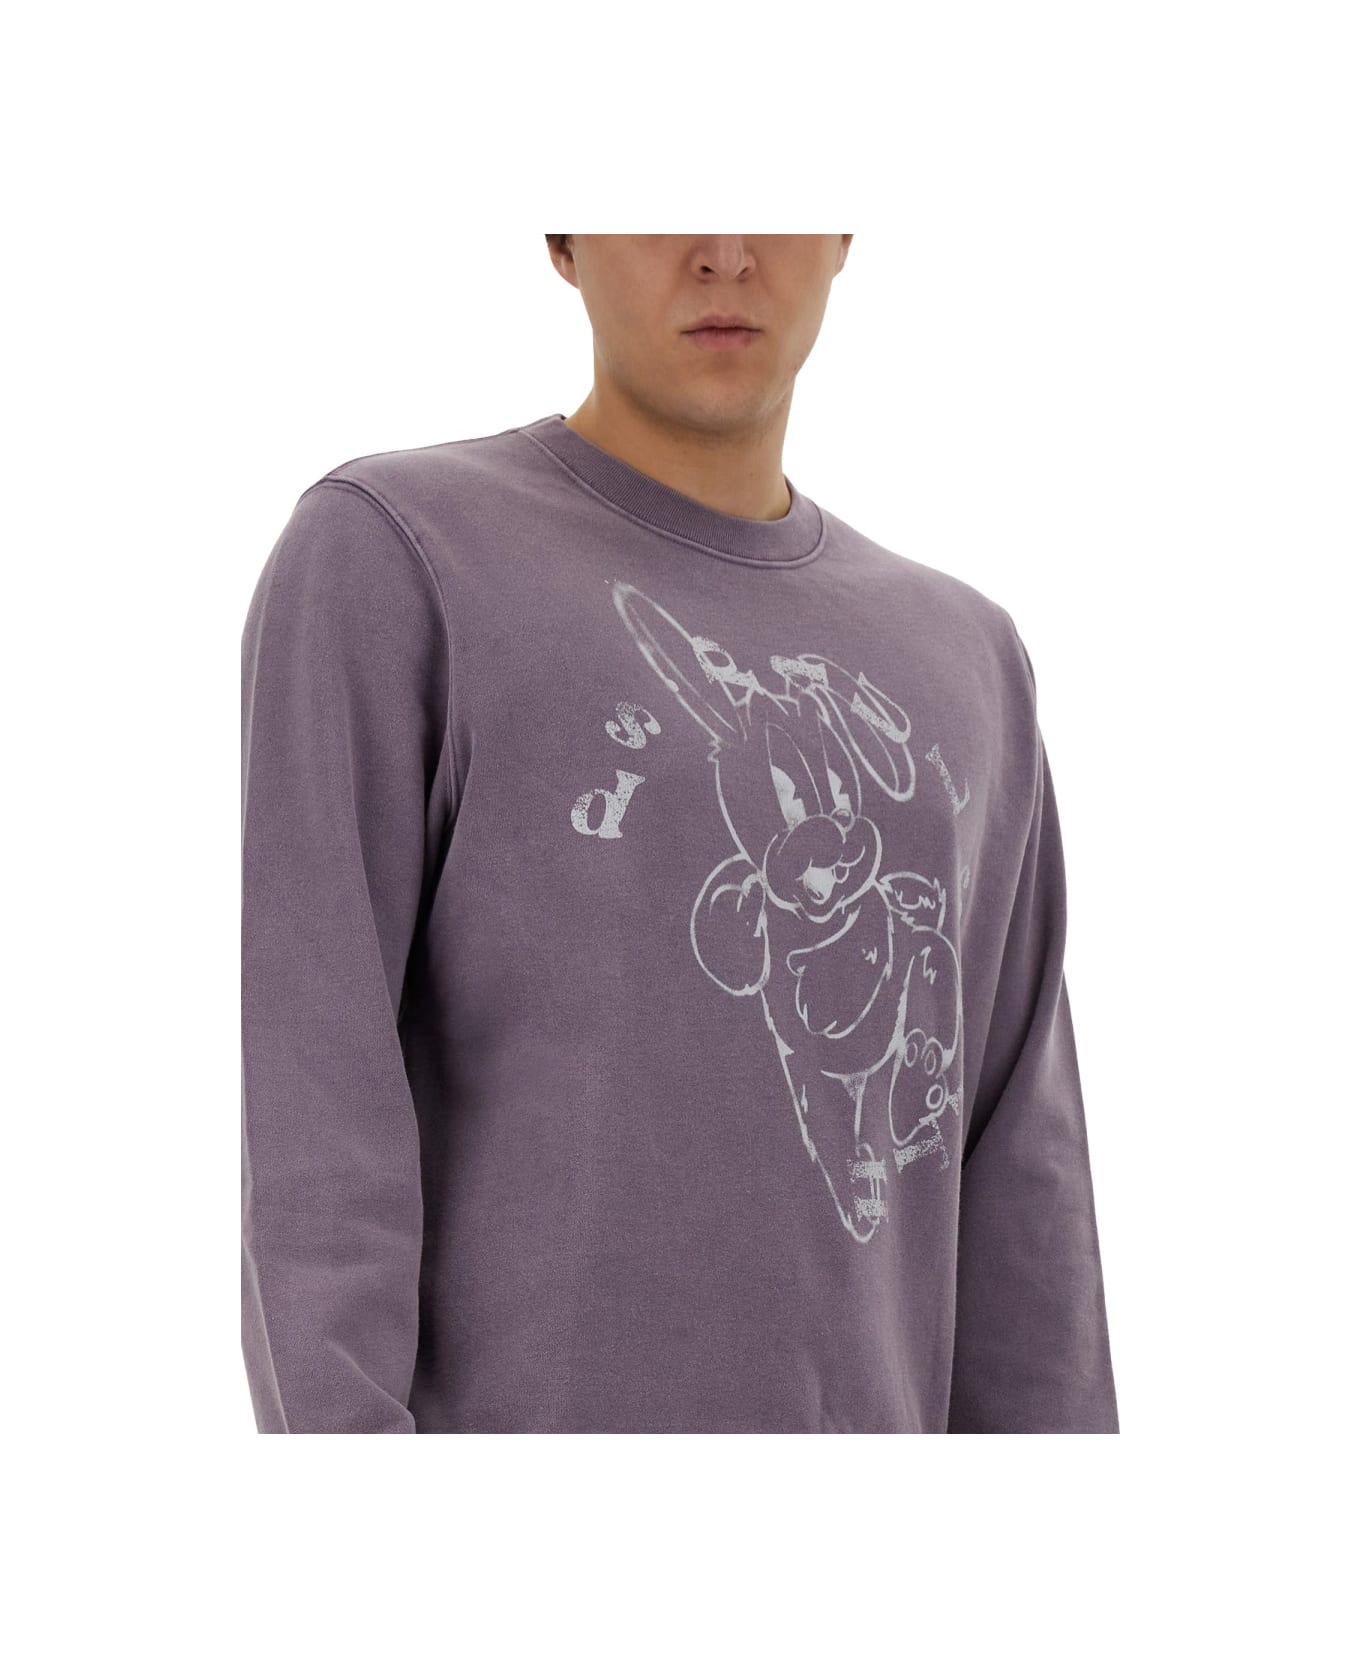 PS by Paul Smith Sweatshirt With Bunny Print - PURPLE